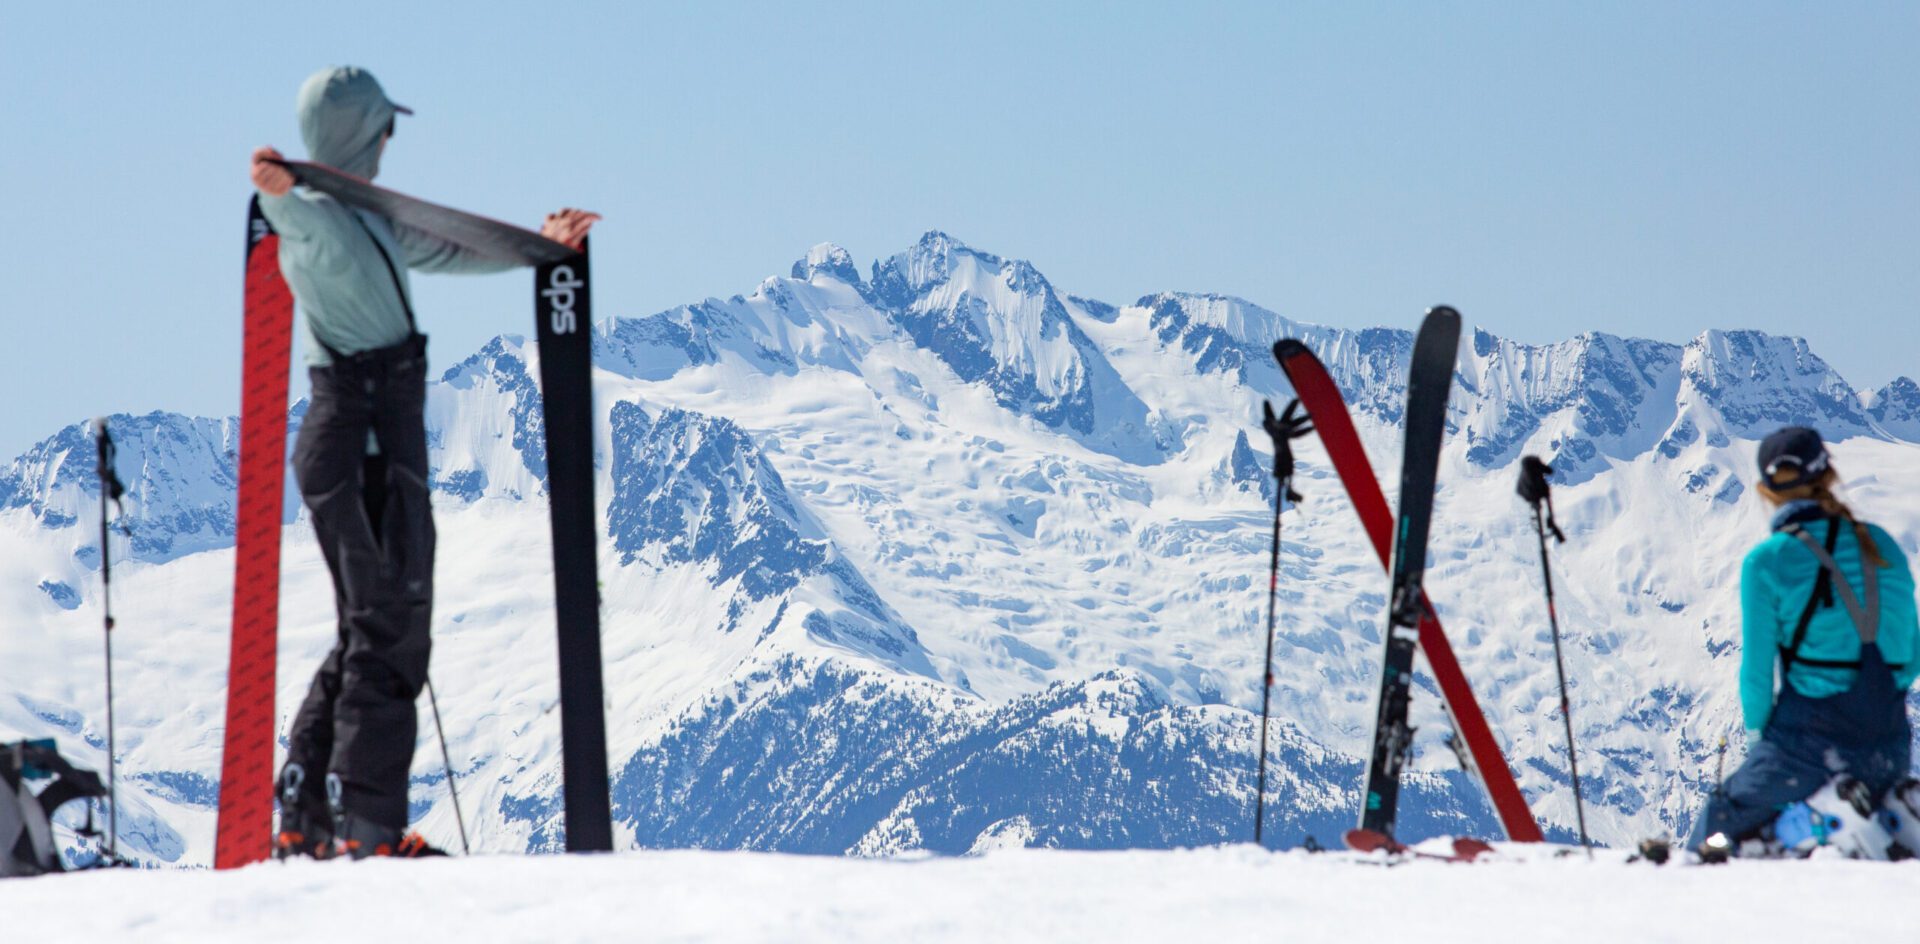 Ski touring skins: Care, storage, tips and tricks